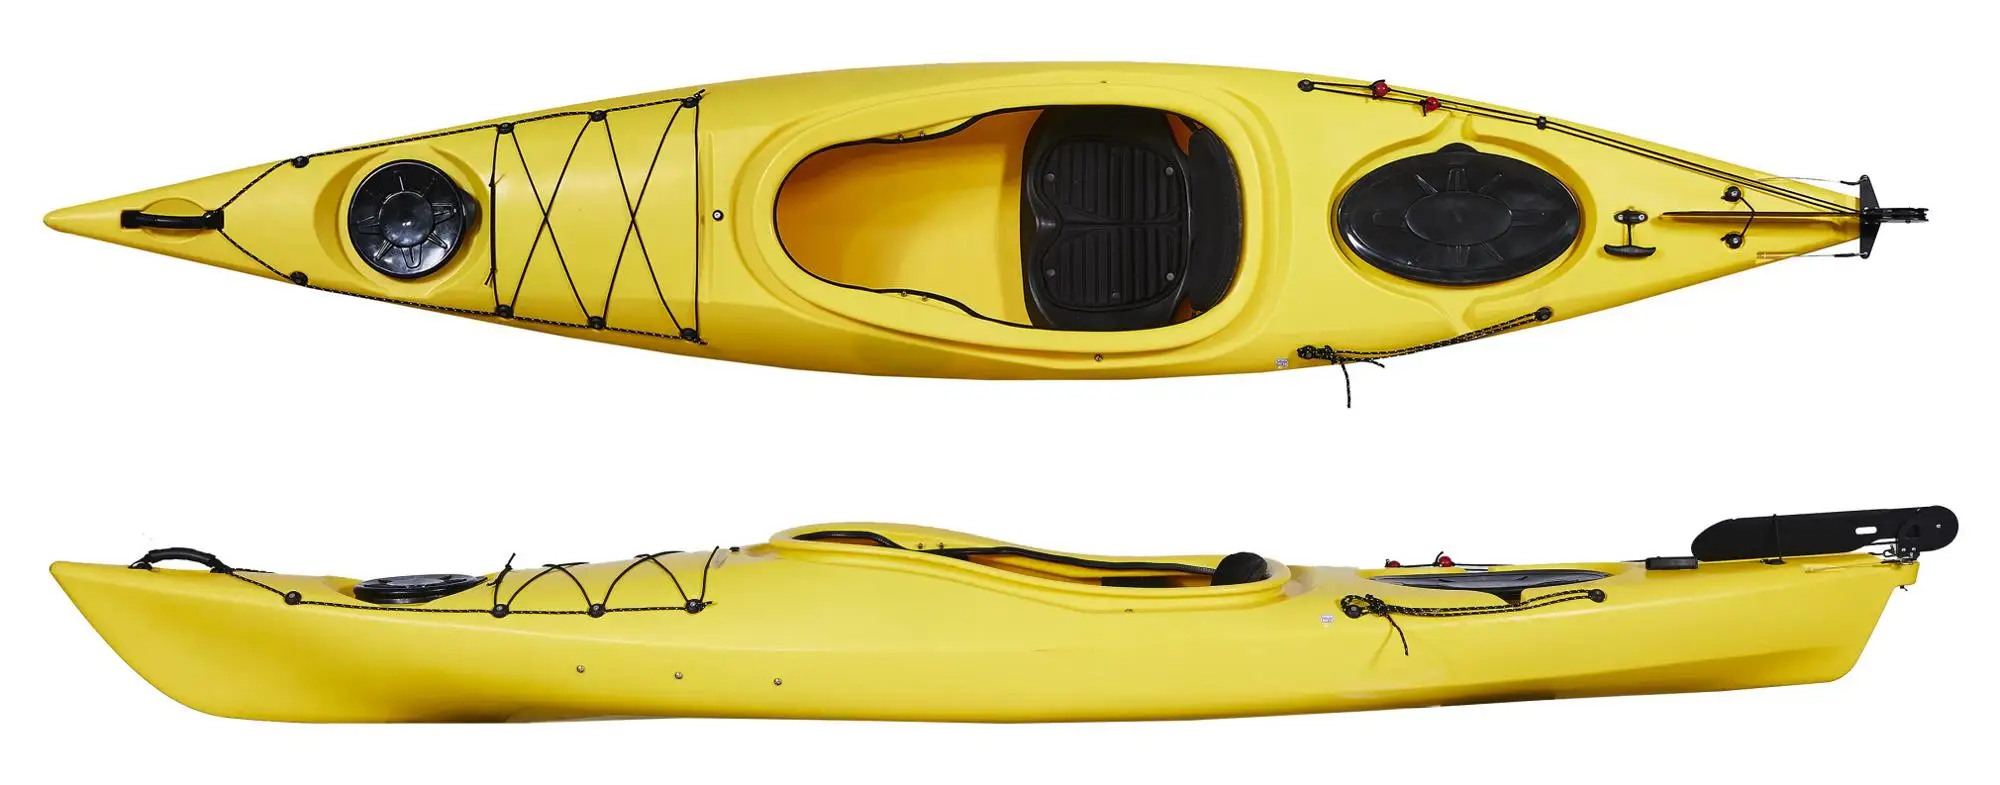 Lsf Factory Offer Canoe Polo Kayak - Buy Canoe Polo,Canoe ...